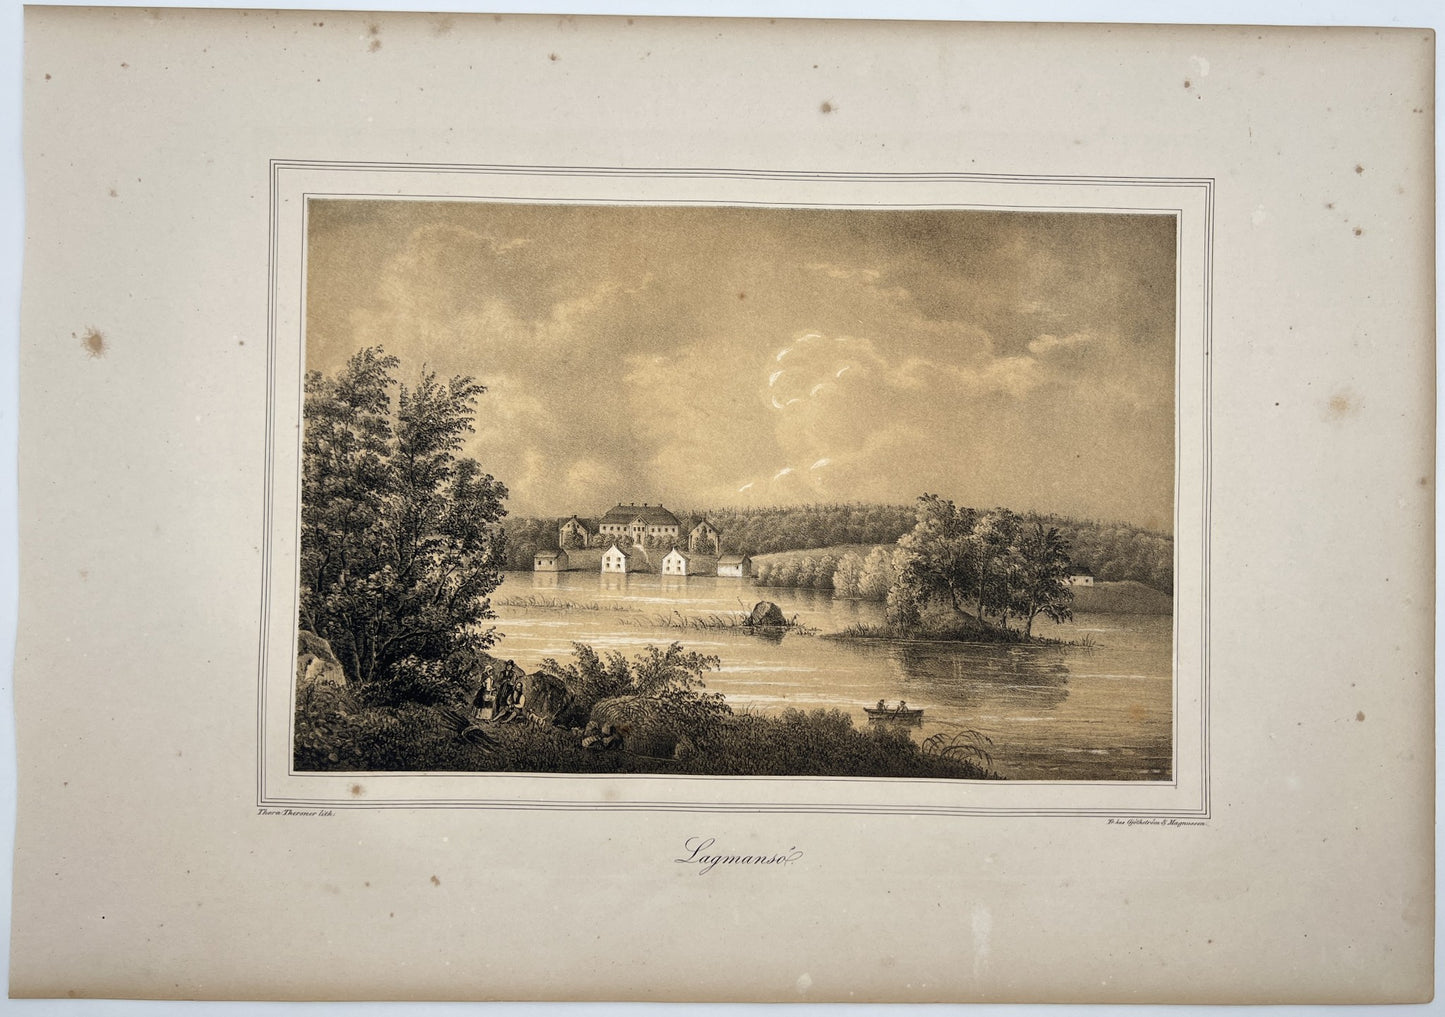 Antique Aquatint - View of Lagmanso Manor - Sodermanland - Scandinavia - Sweden